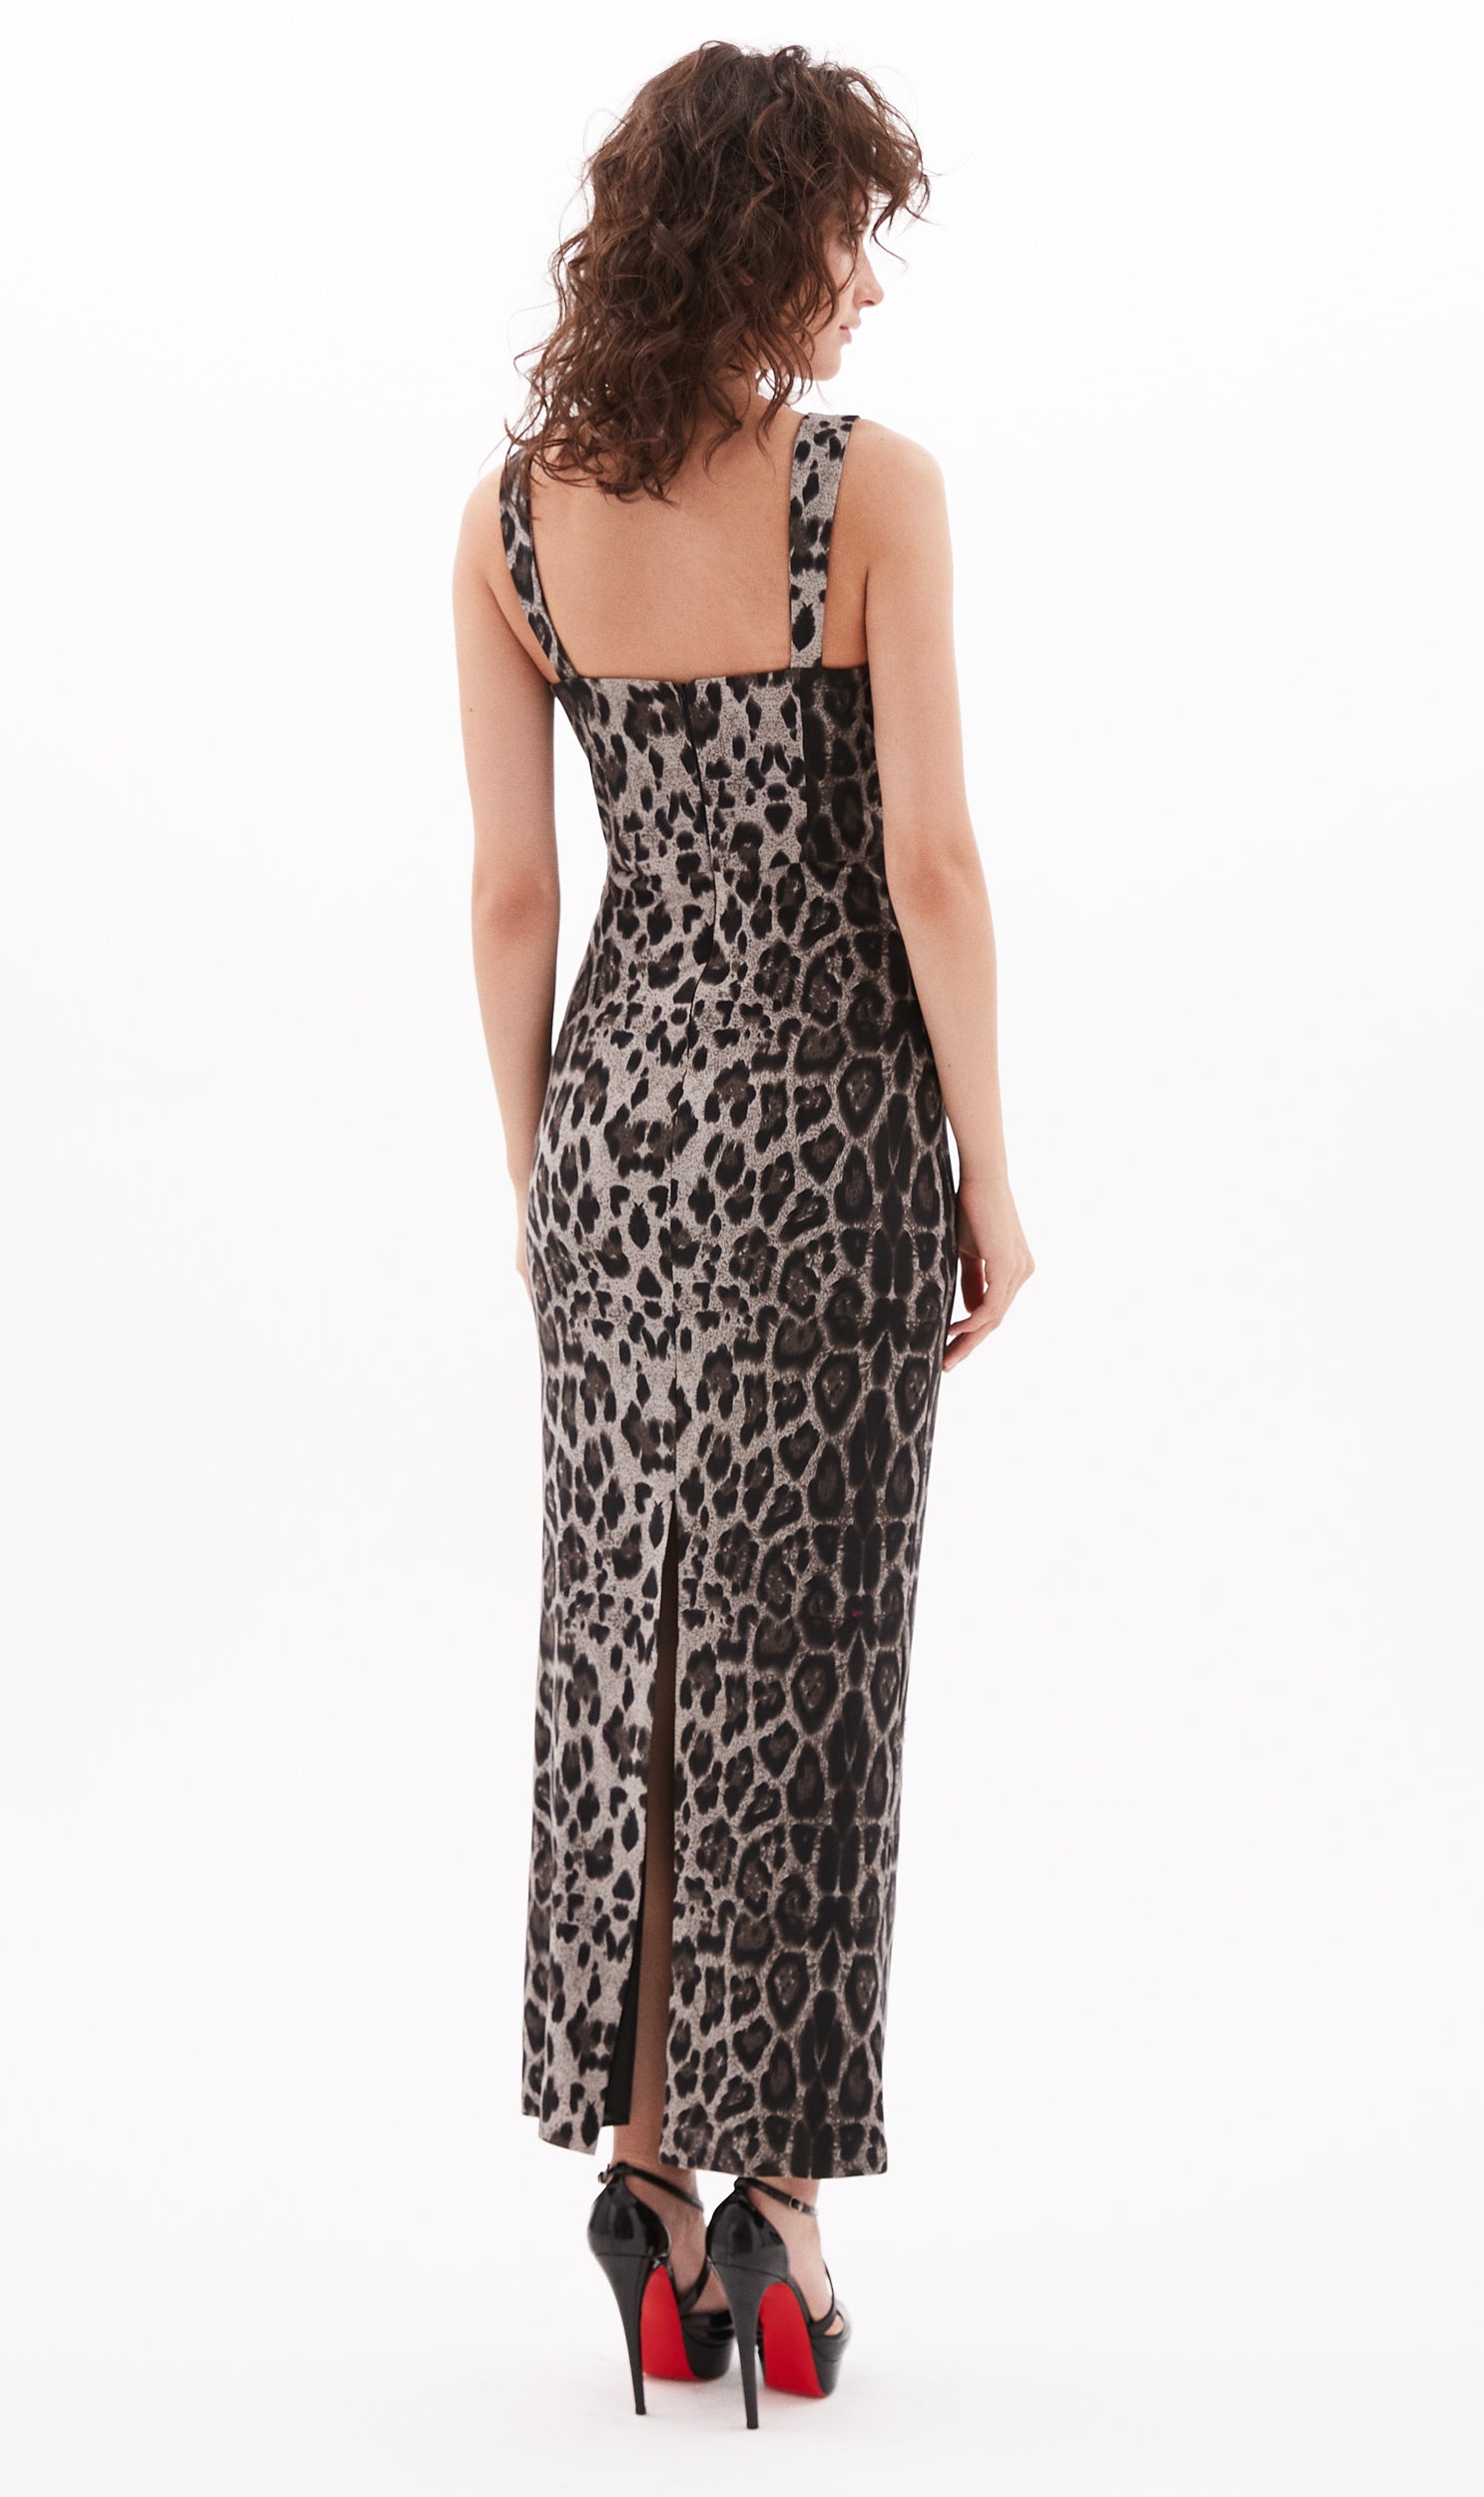 Lüks Kaliteli Elbise Modellerinden  Jolie Leopard Dress